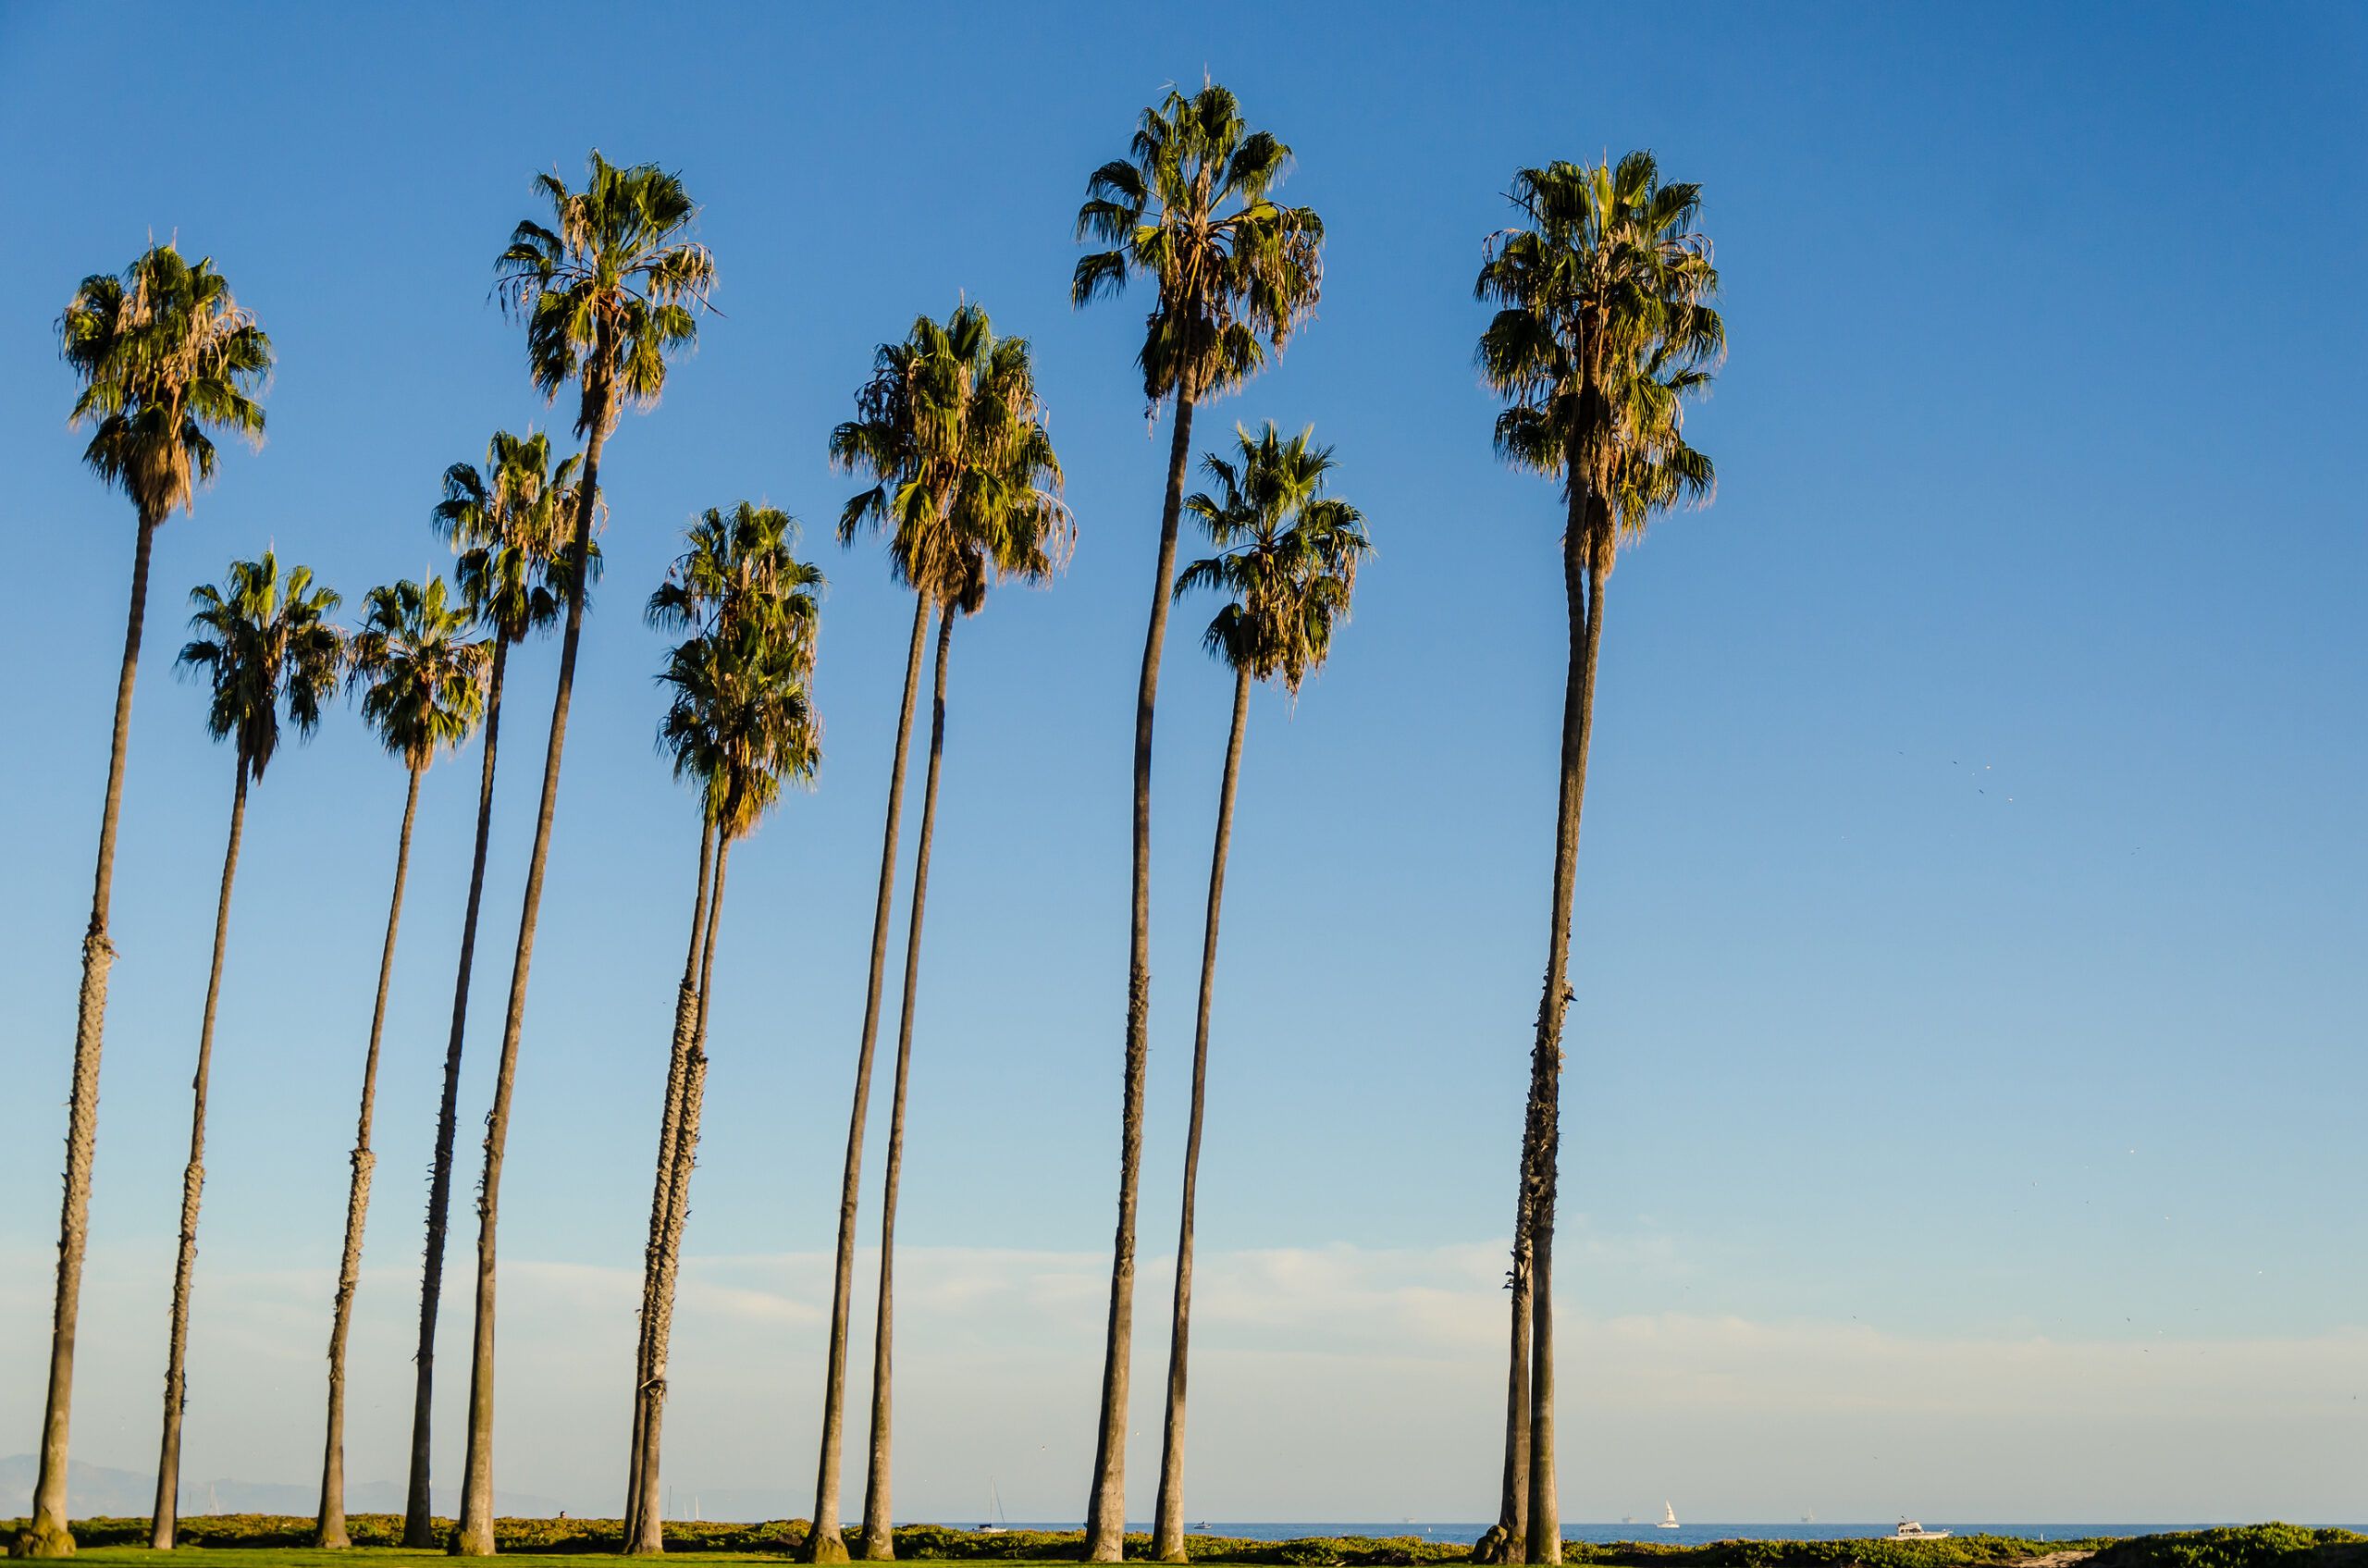 California high palm trees on the beach near the ocean, blue sky background, Santa Barbara